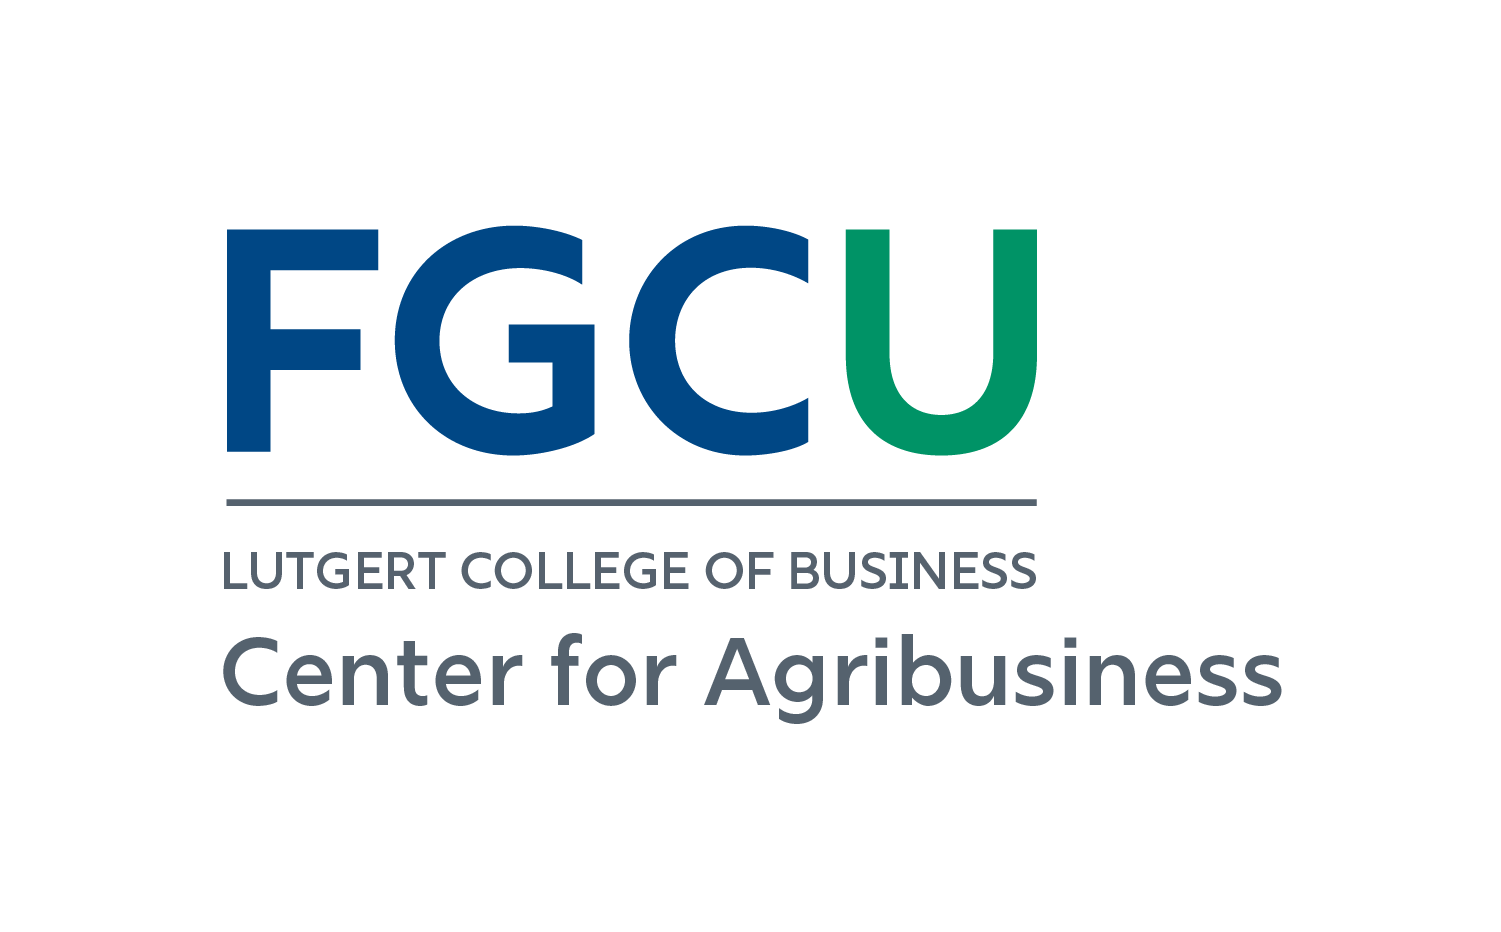 Center for Agribusiness